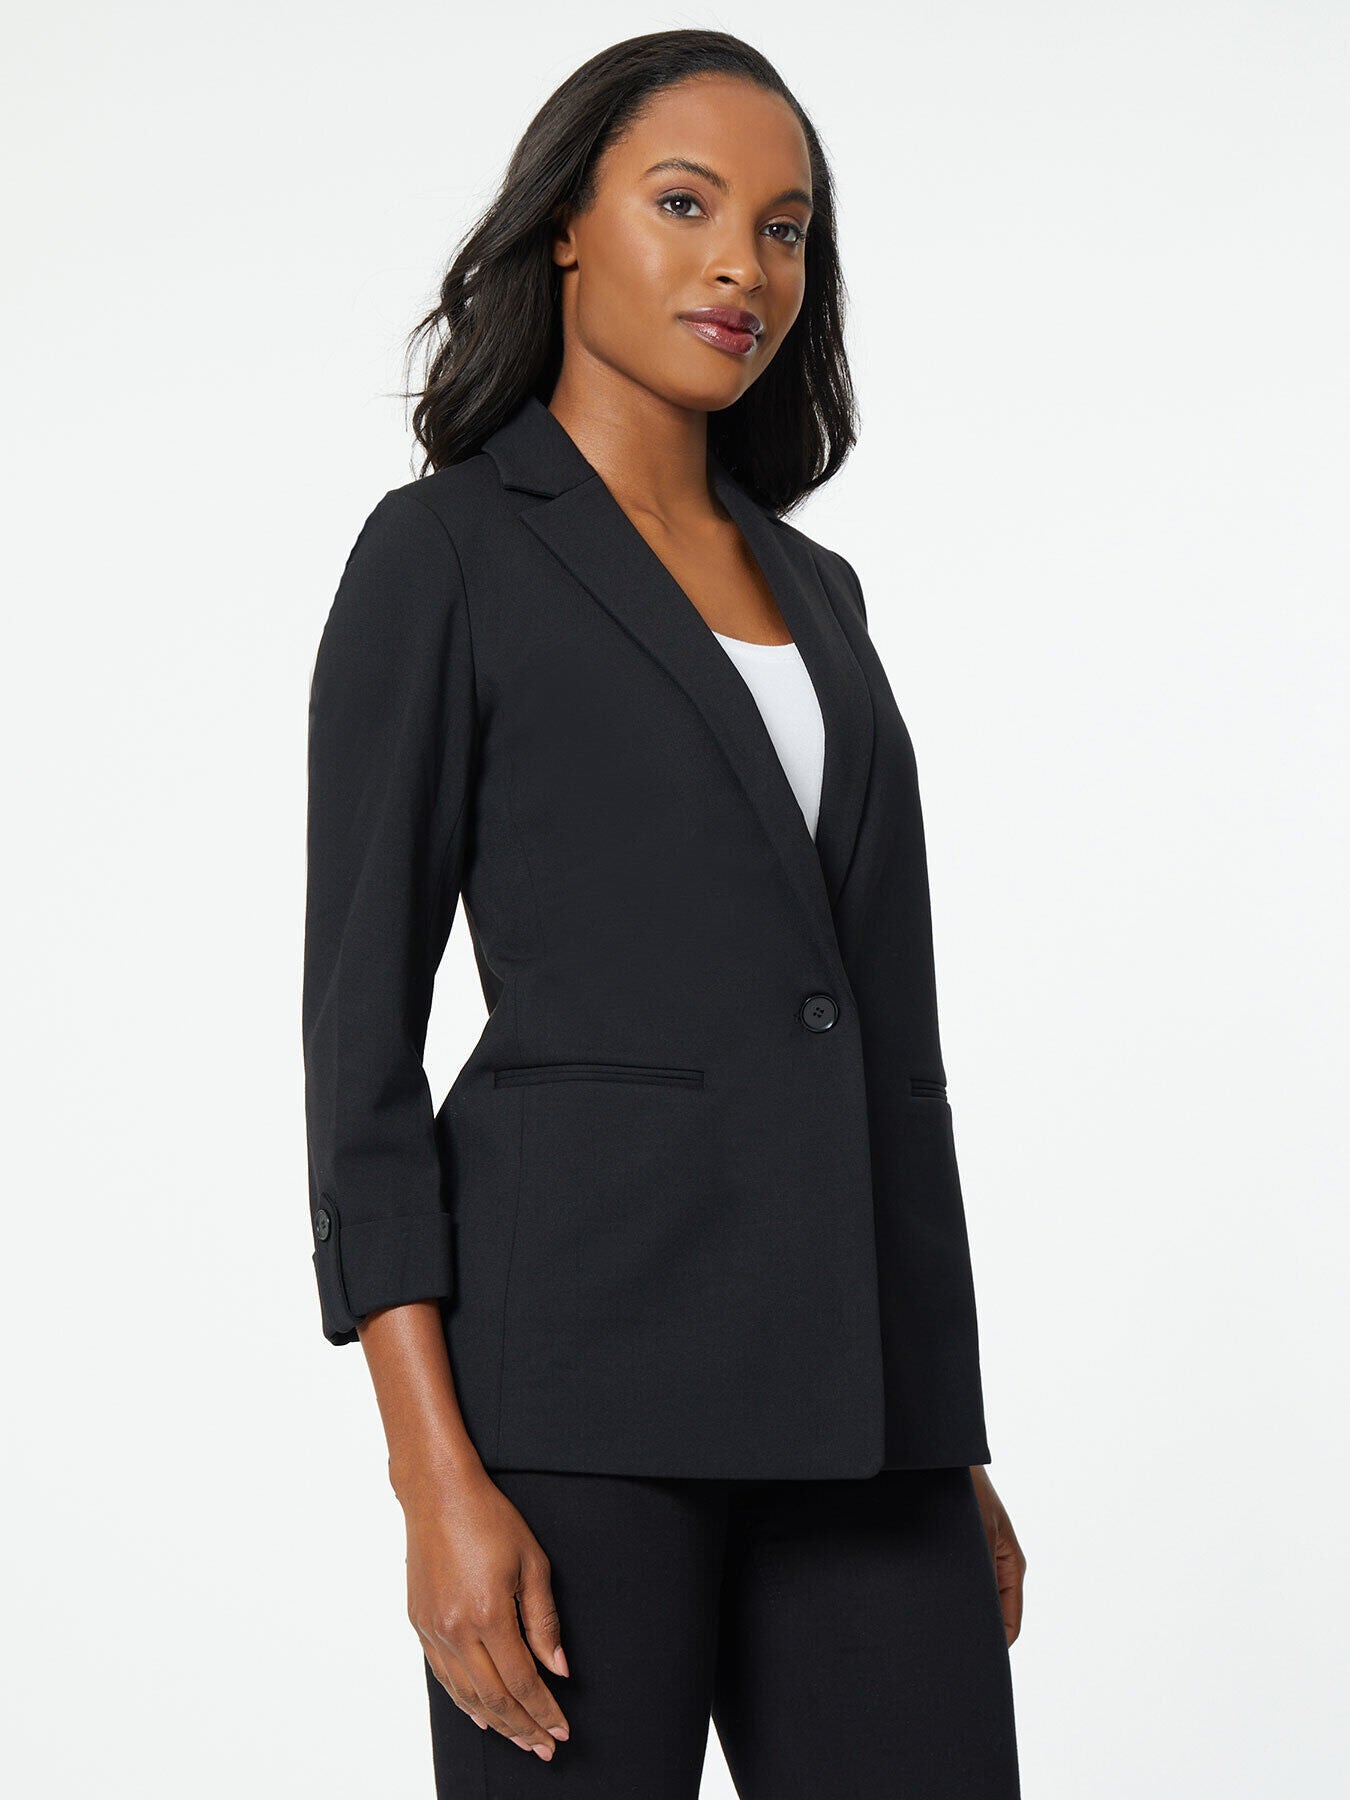 Women's Black Blazer - Rolled Tab Sleeve Blazer | Jones New York